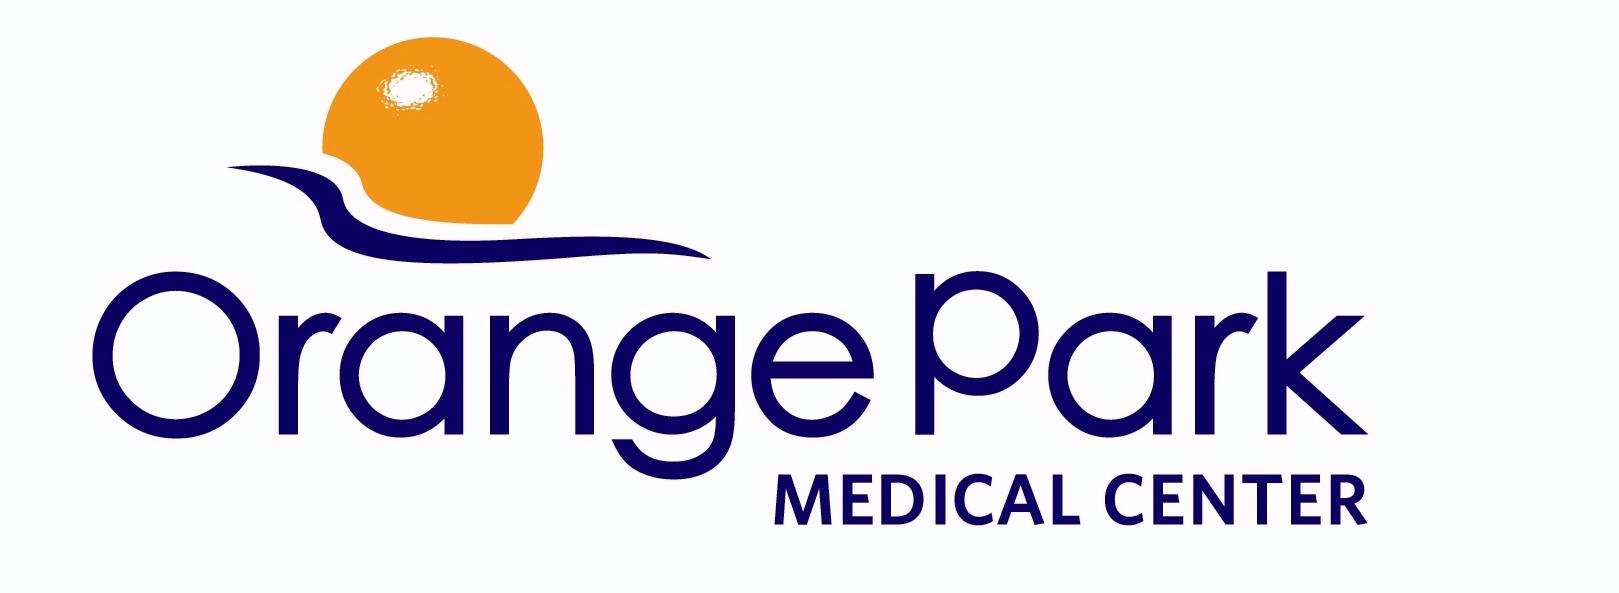 Orange Medical Logo - Emergency Medicine New Freestanding ED in Orangepark, FL. Orange